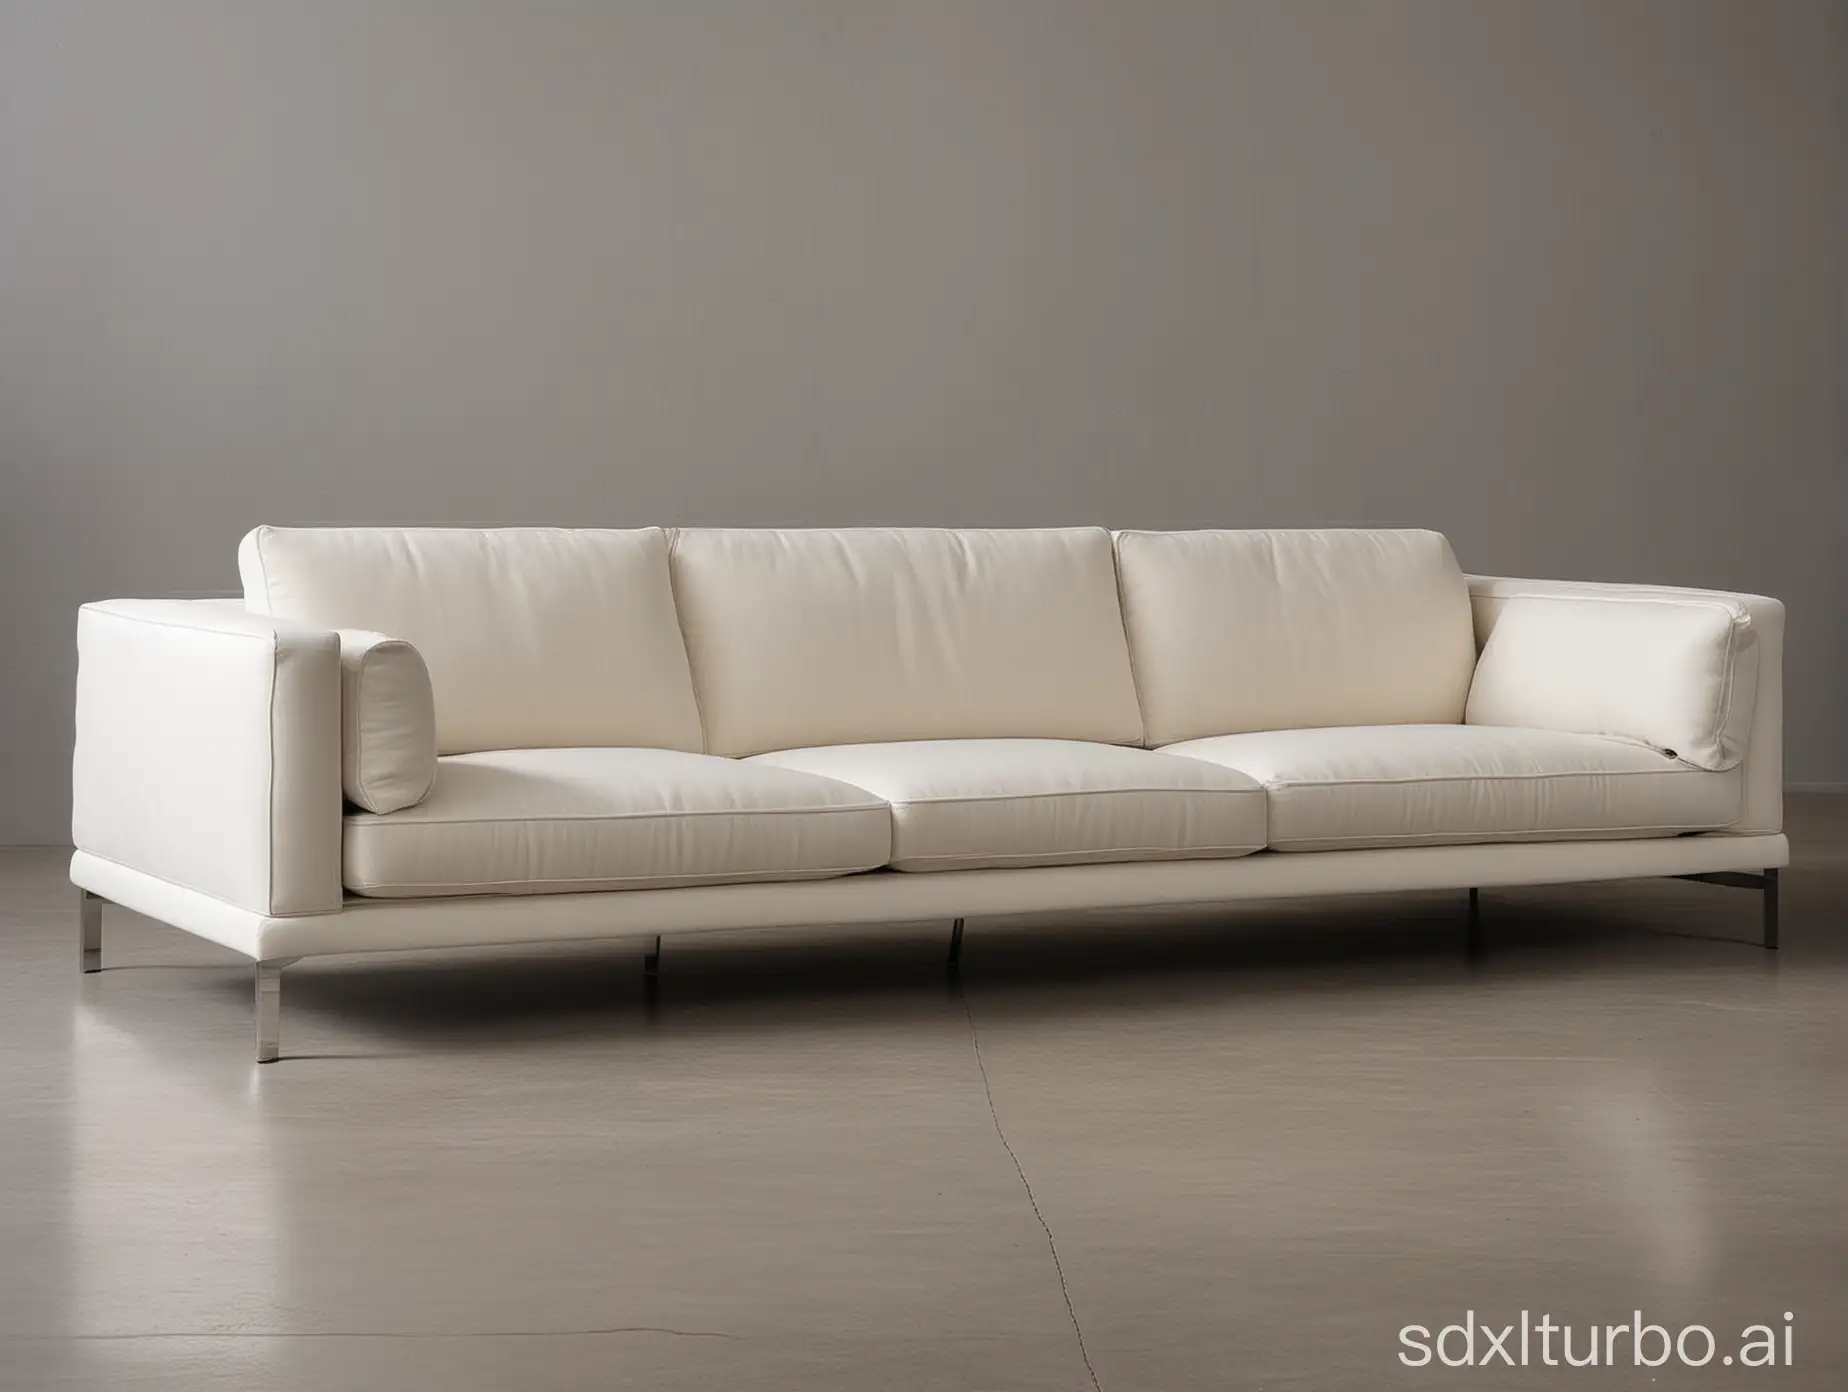 Italian minimalist modern sofa